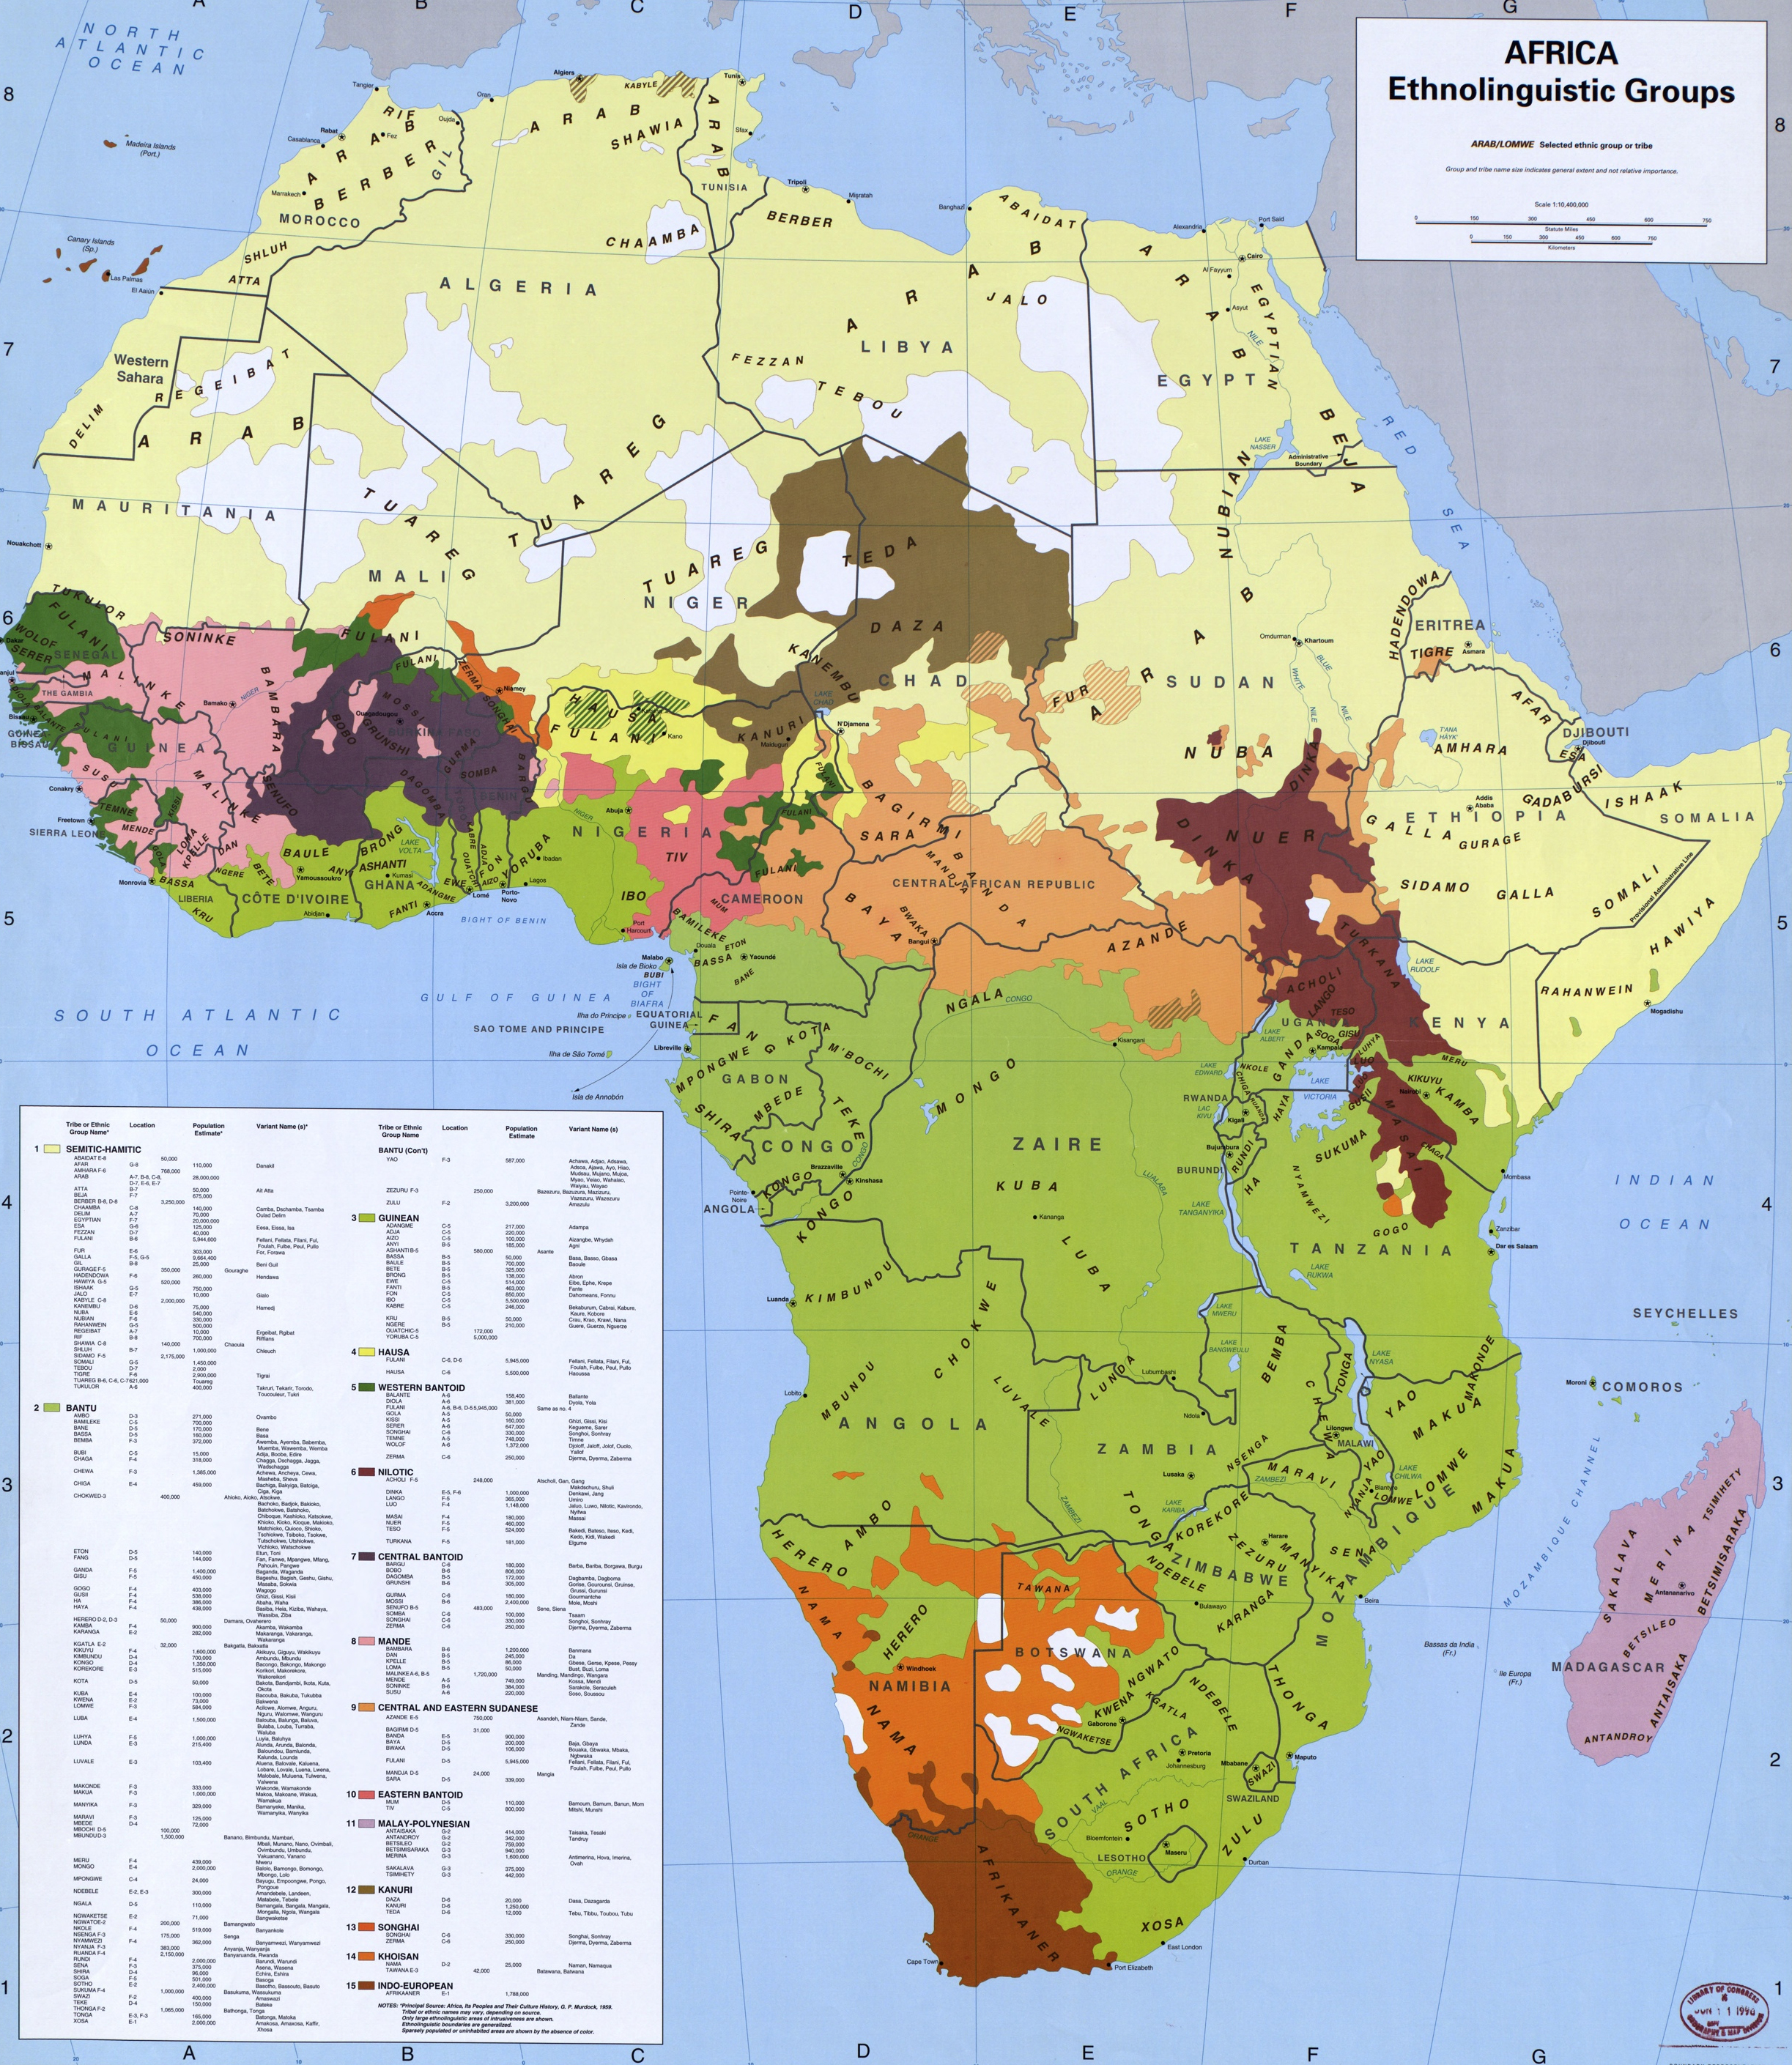 George Murdock's Ethnolinguistic groups of Africa map, 1996